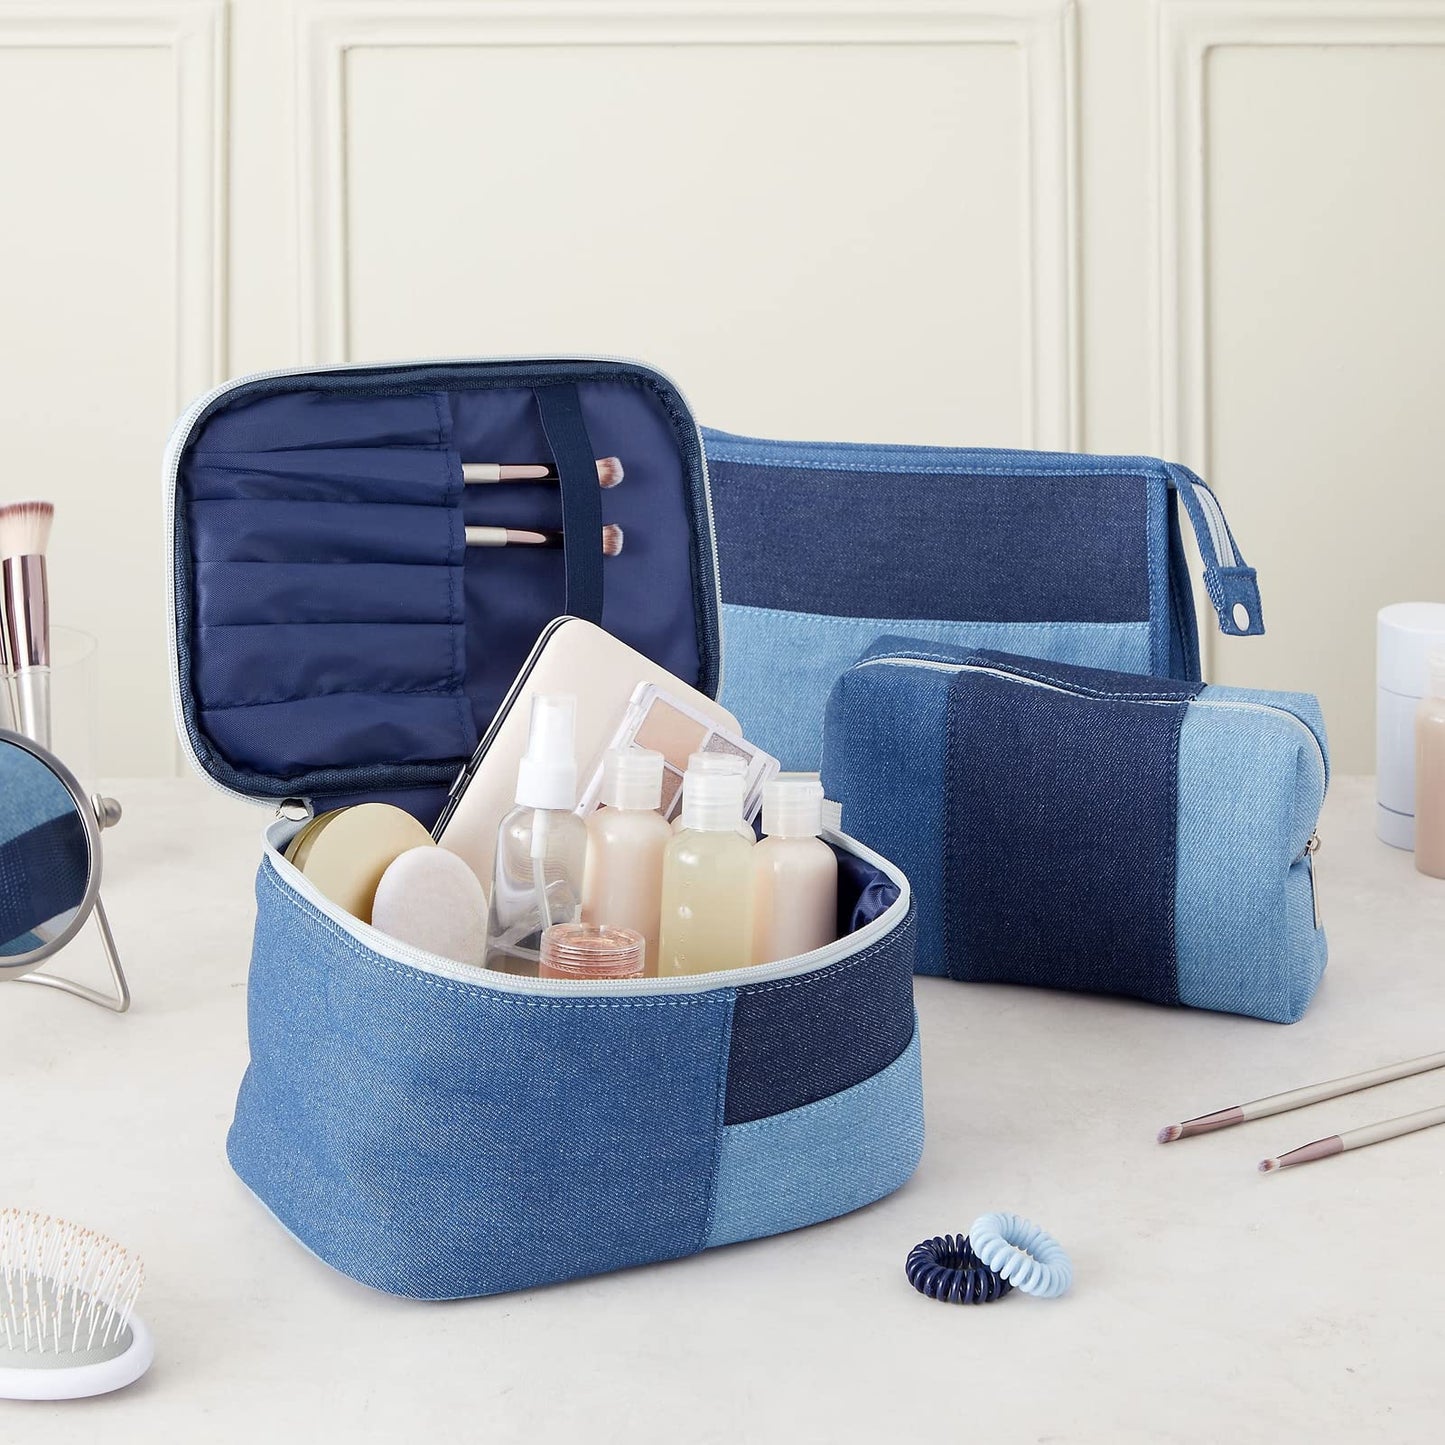 Glamlily 3-Piece Retro Jean Cosmetic Makeup Bag Set For Travel, Beauty Organization, Cotton Denim (3 Sizes: Large, Medium, Small)